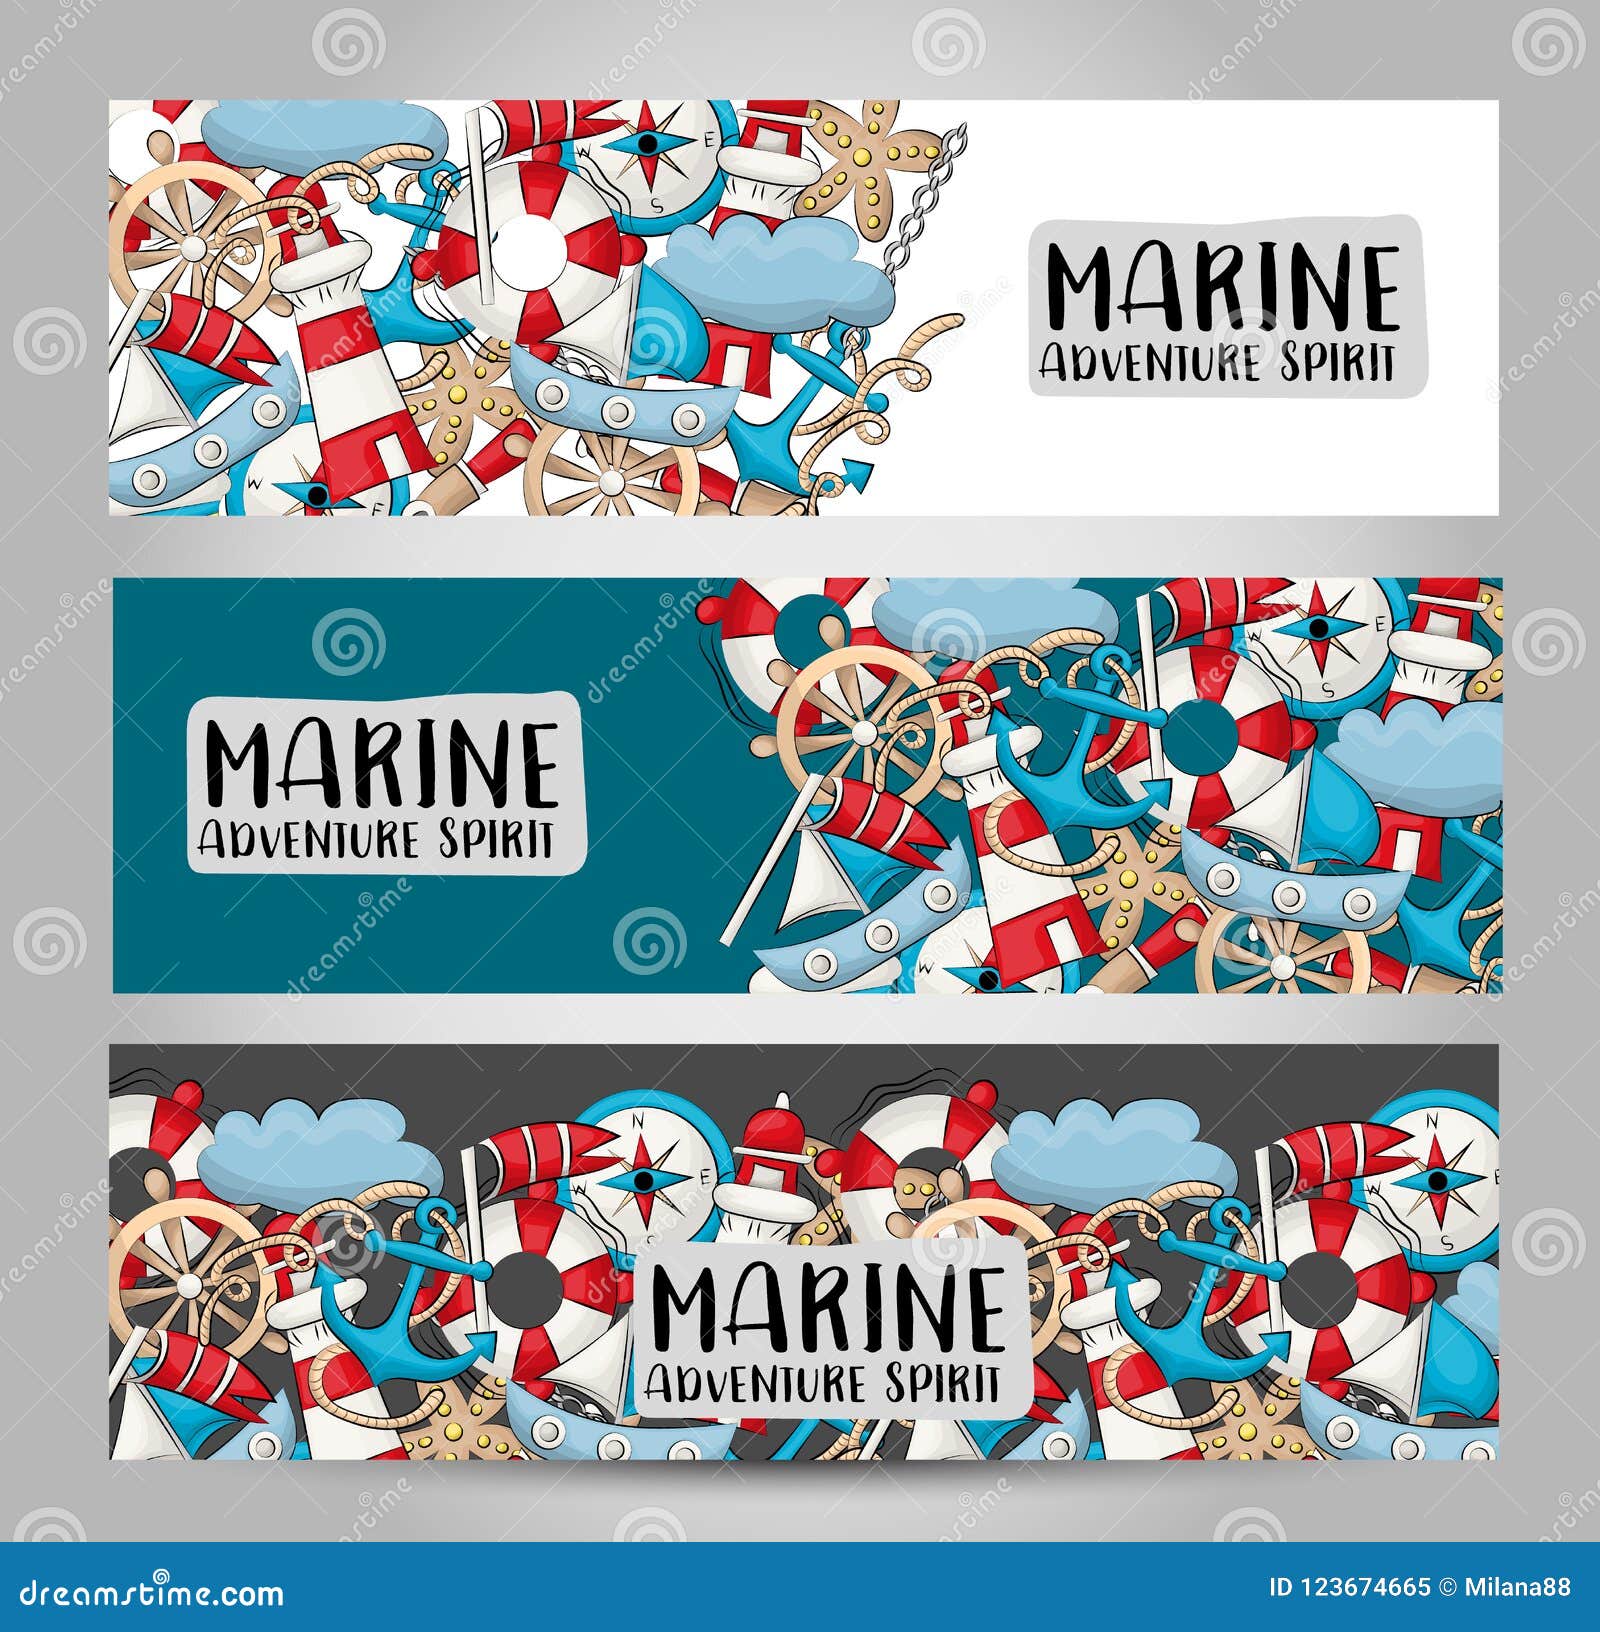 Marine Nautical Travel Concept. Horizontal Banner Template Set With Nautical Banner Template